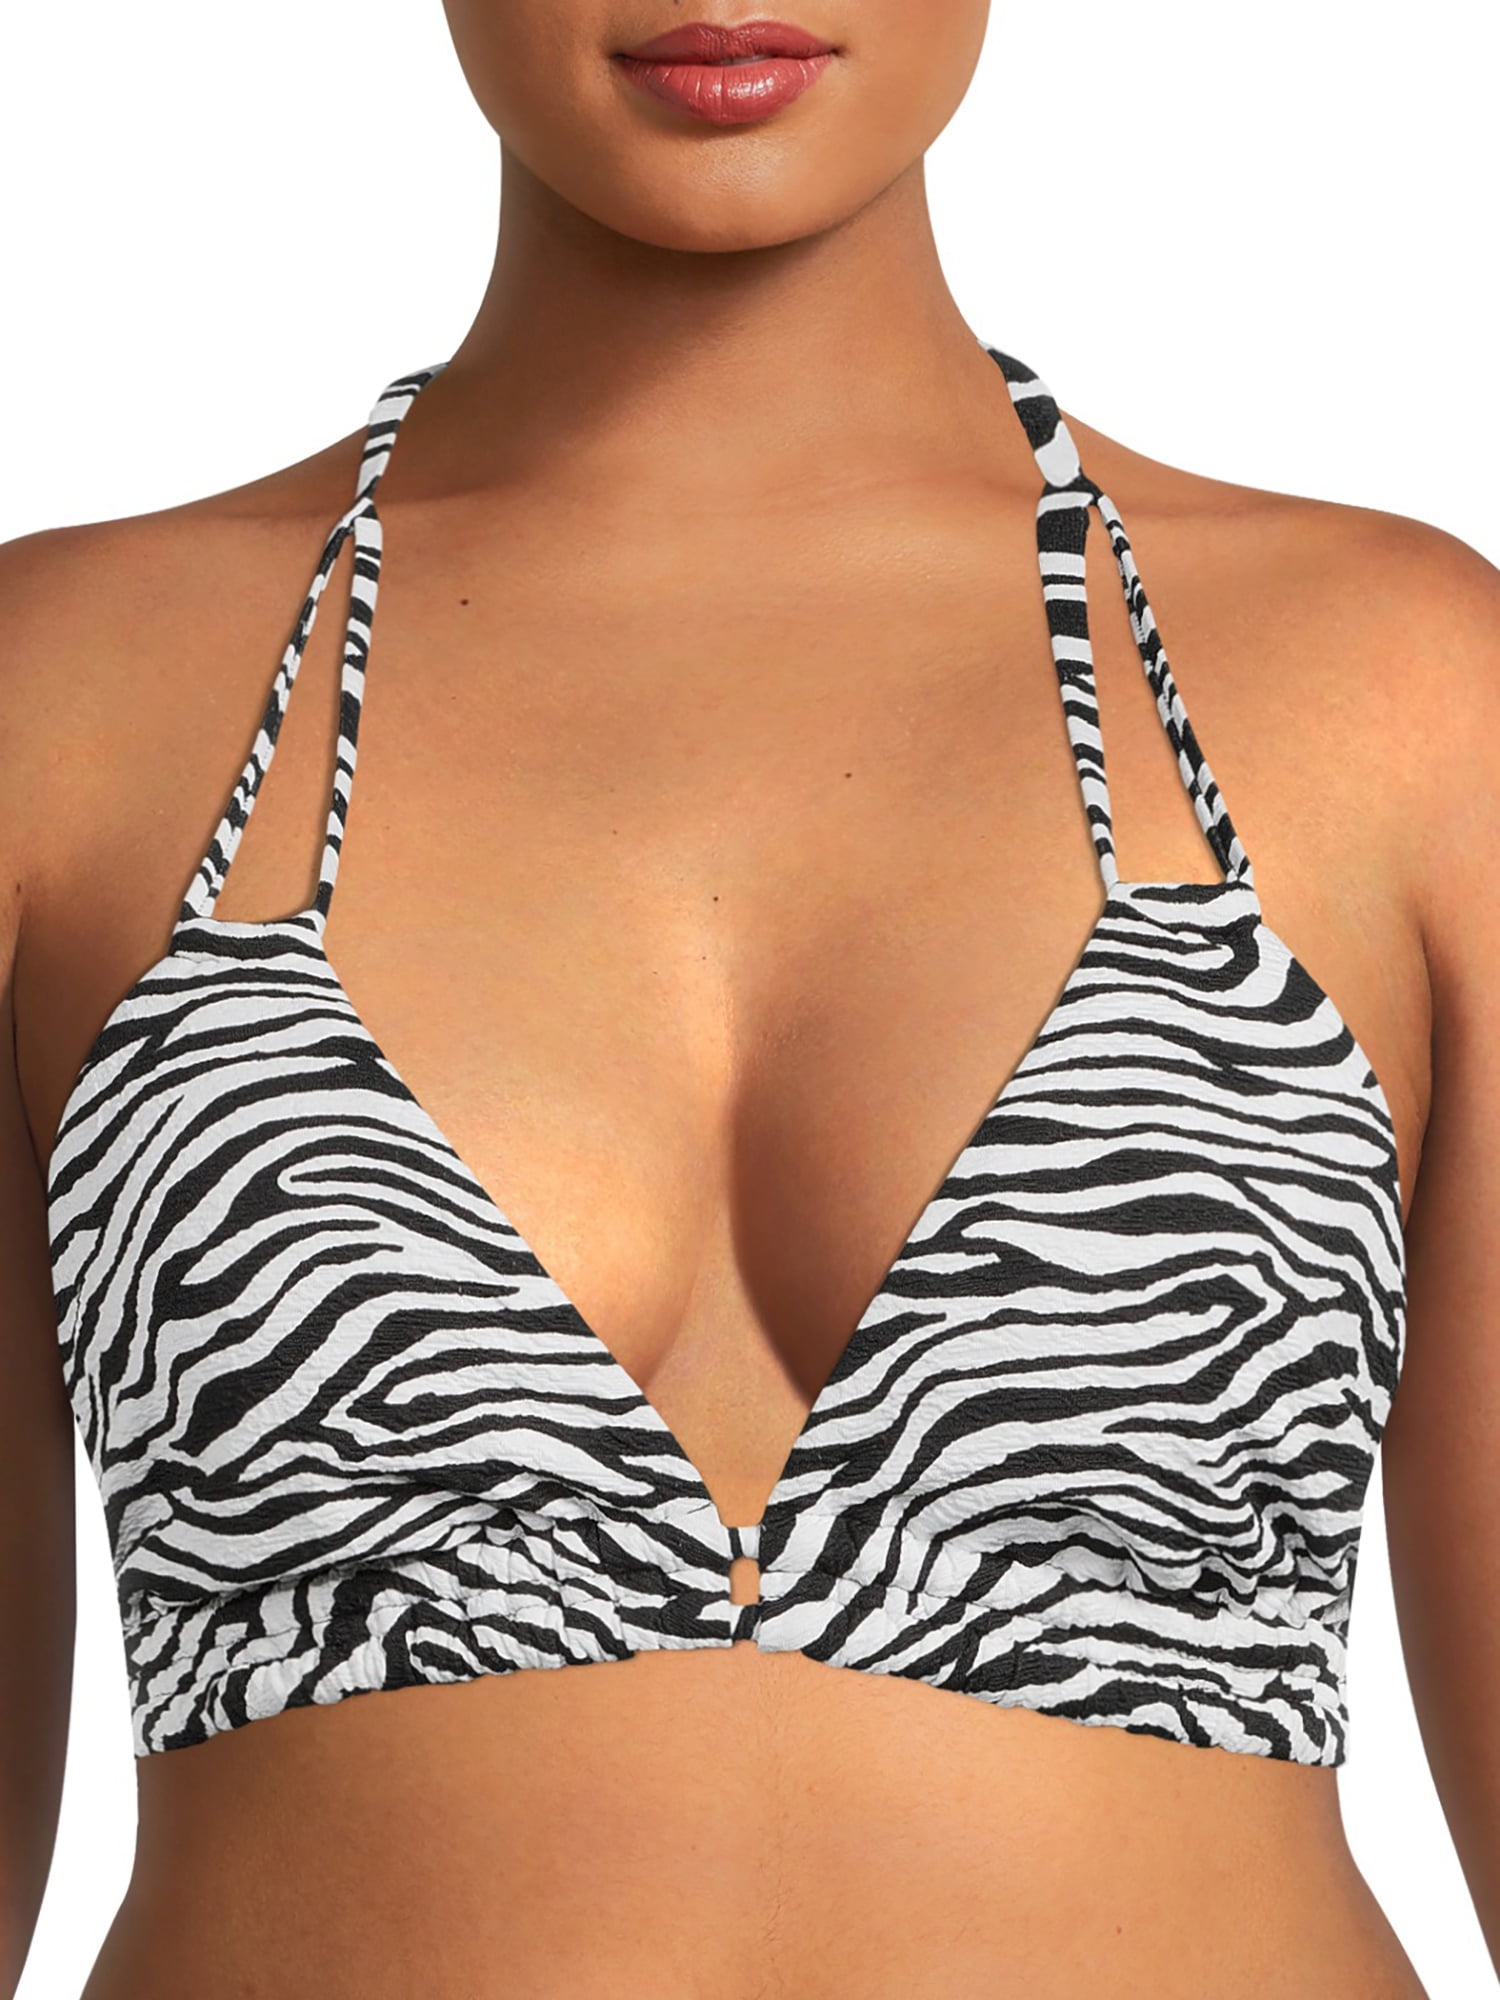 Leia Maan worm Time and True Women's Plus Size Zebra Print Triangle Bikini Swim Top -  Walmart.com